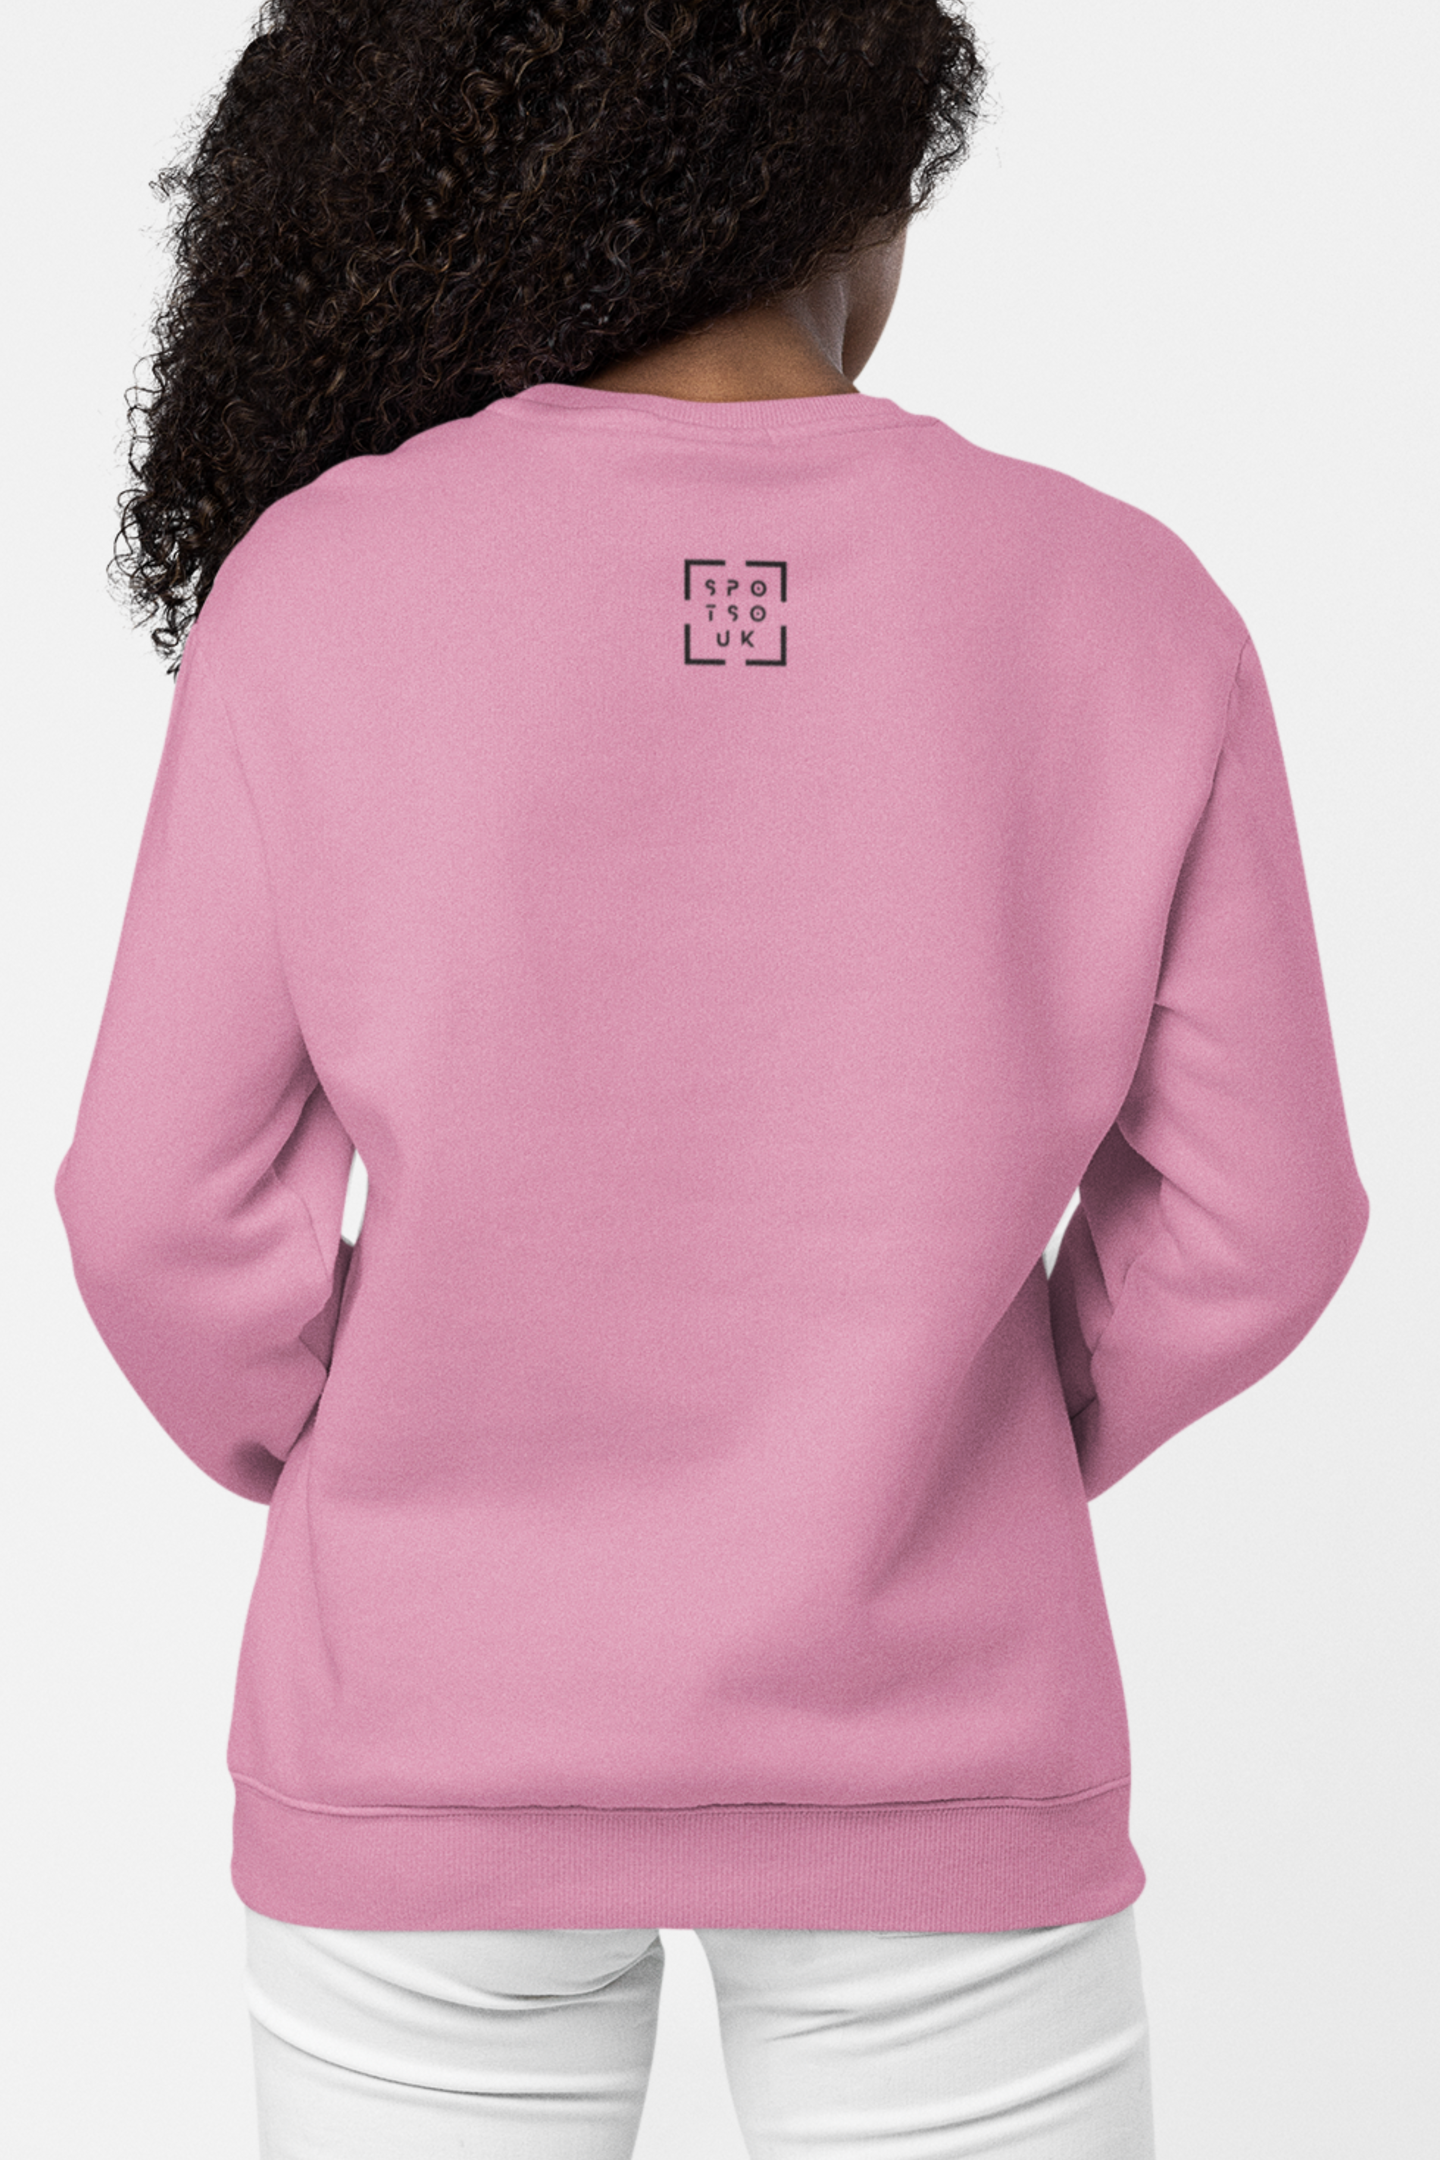 Women's Graphic Crew Neck Sweatshirts